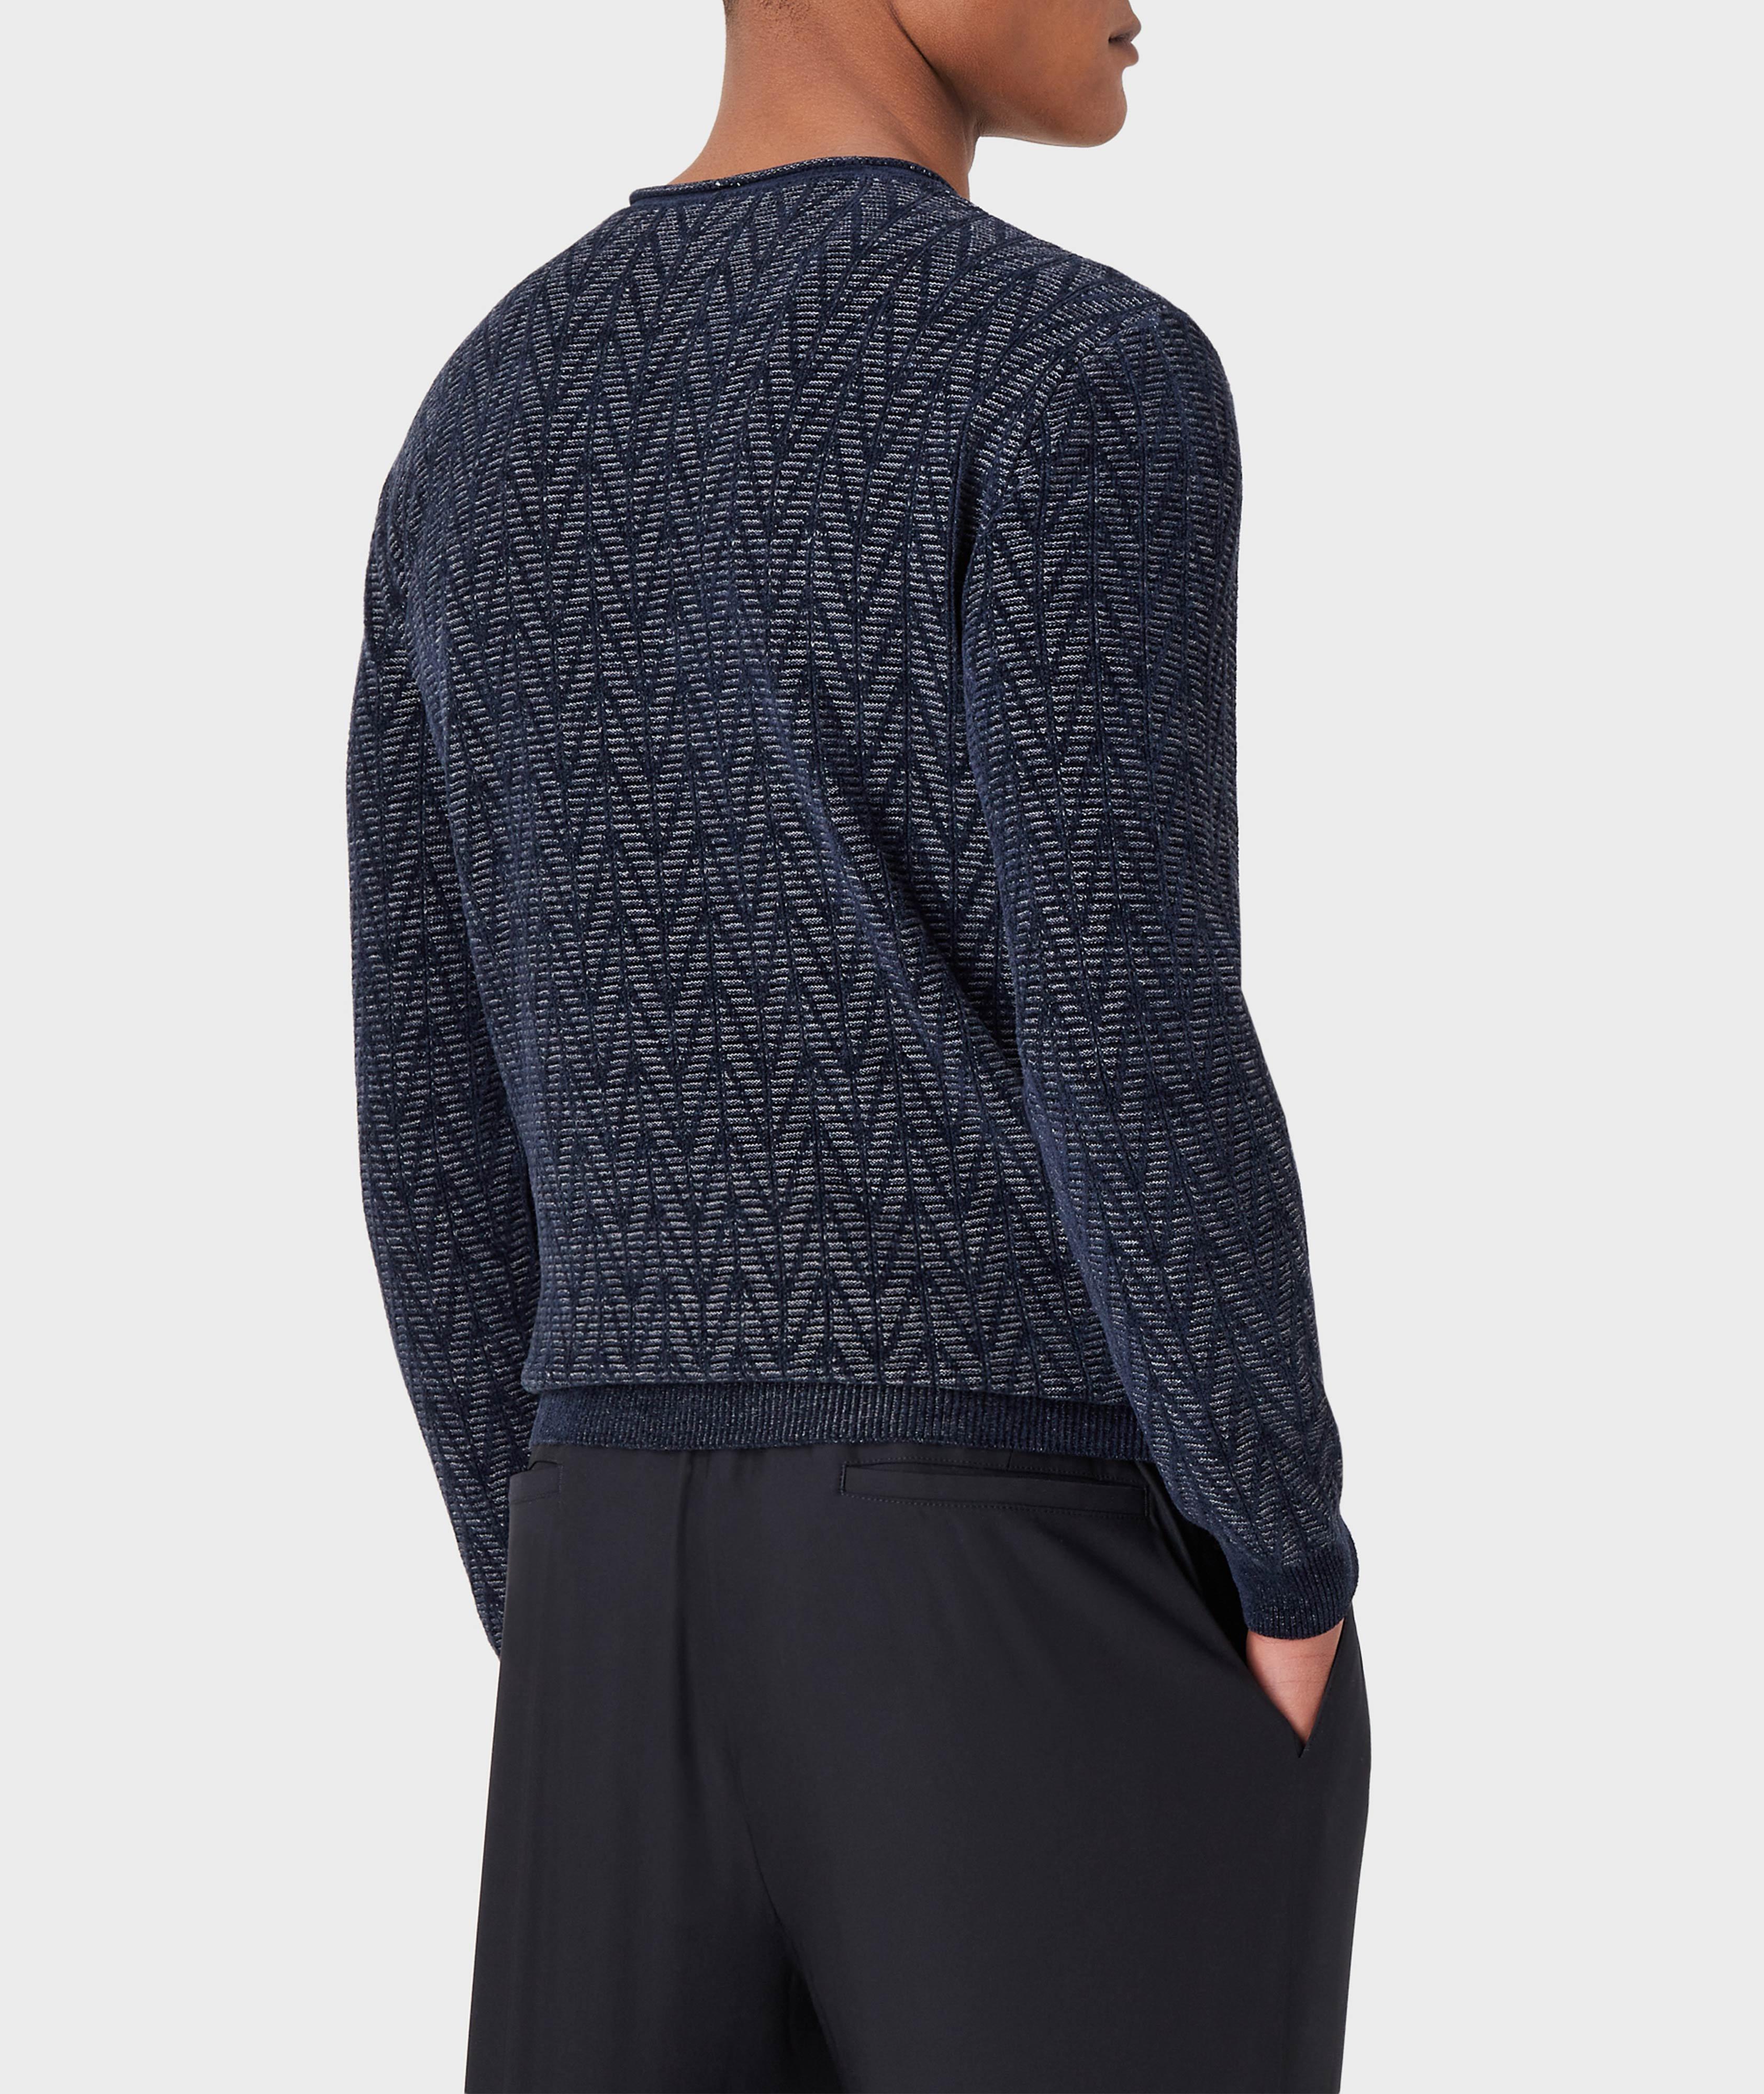 Wool-Blend Jacquard Chevron Sweater image 2